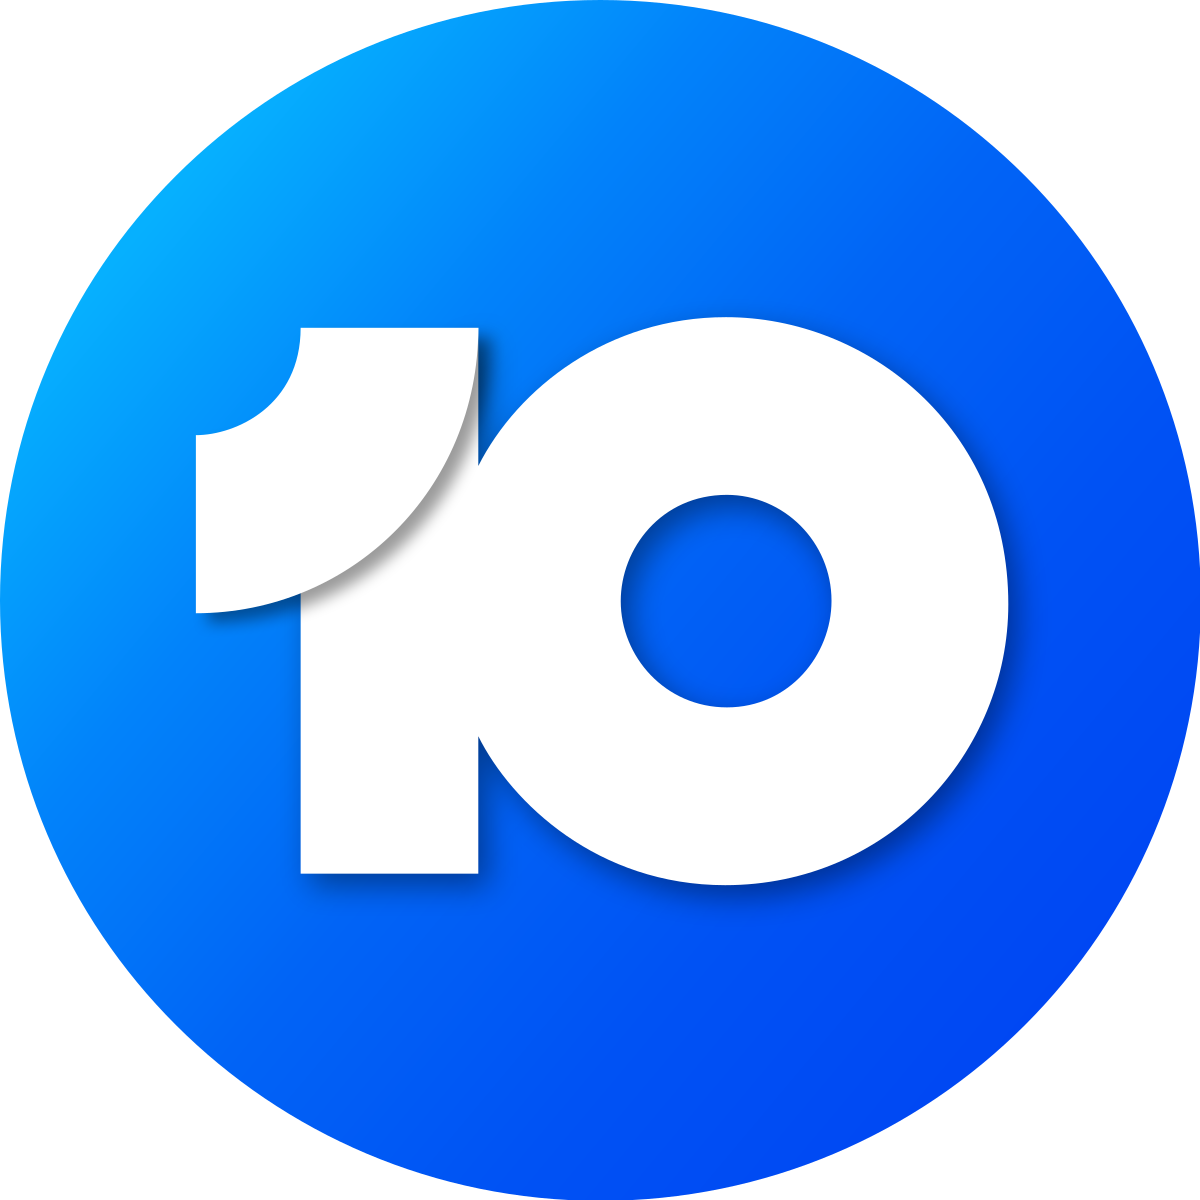 1200px-Network_10_logo_2018.svg.png